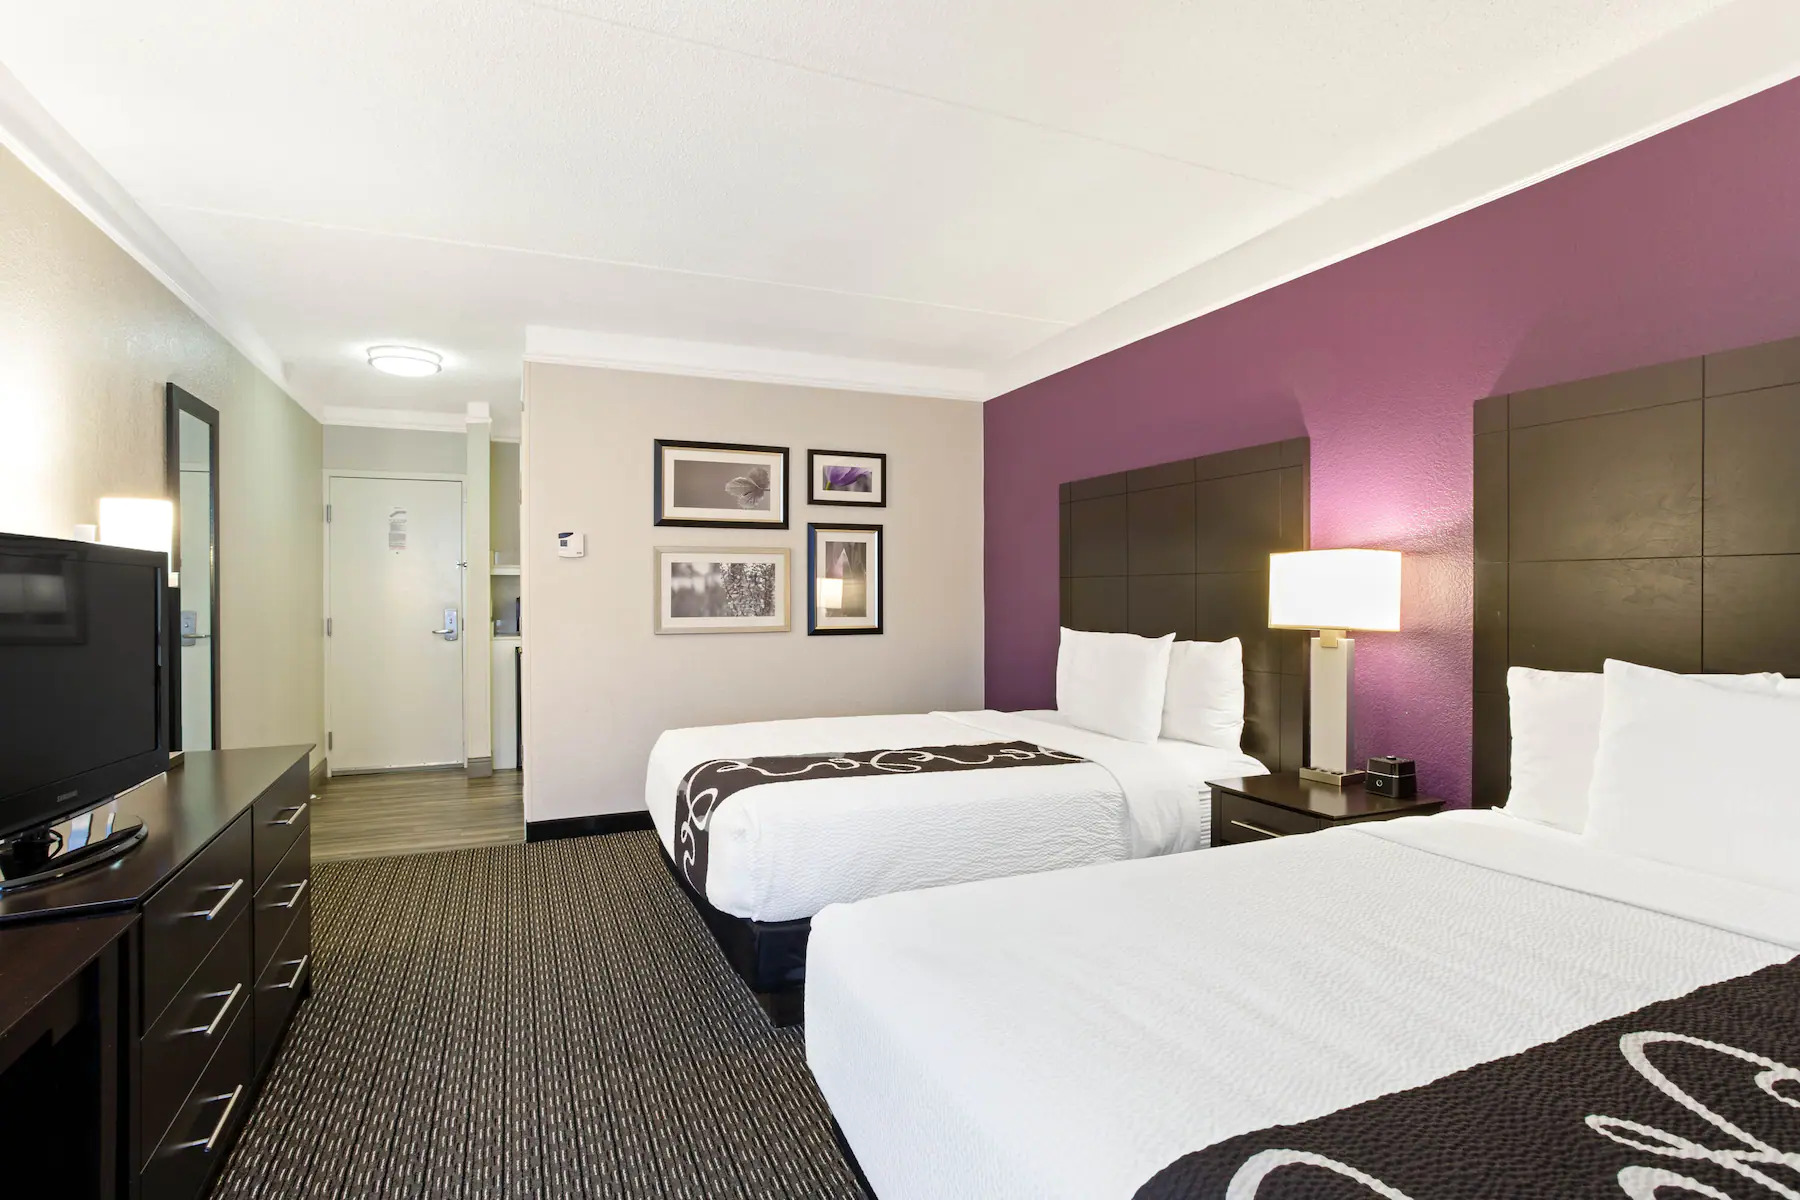 Massachusetts Hotels Motels Inns, MA Hotels Motels Inns, Hotels Motels Inns In Massachusetts, Hotels Motels Inns In MA